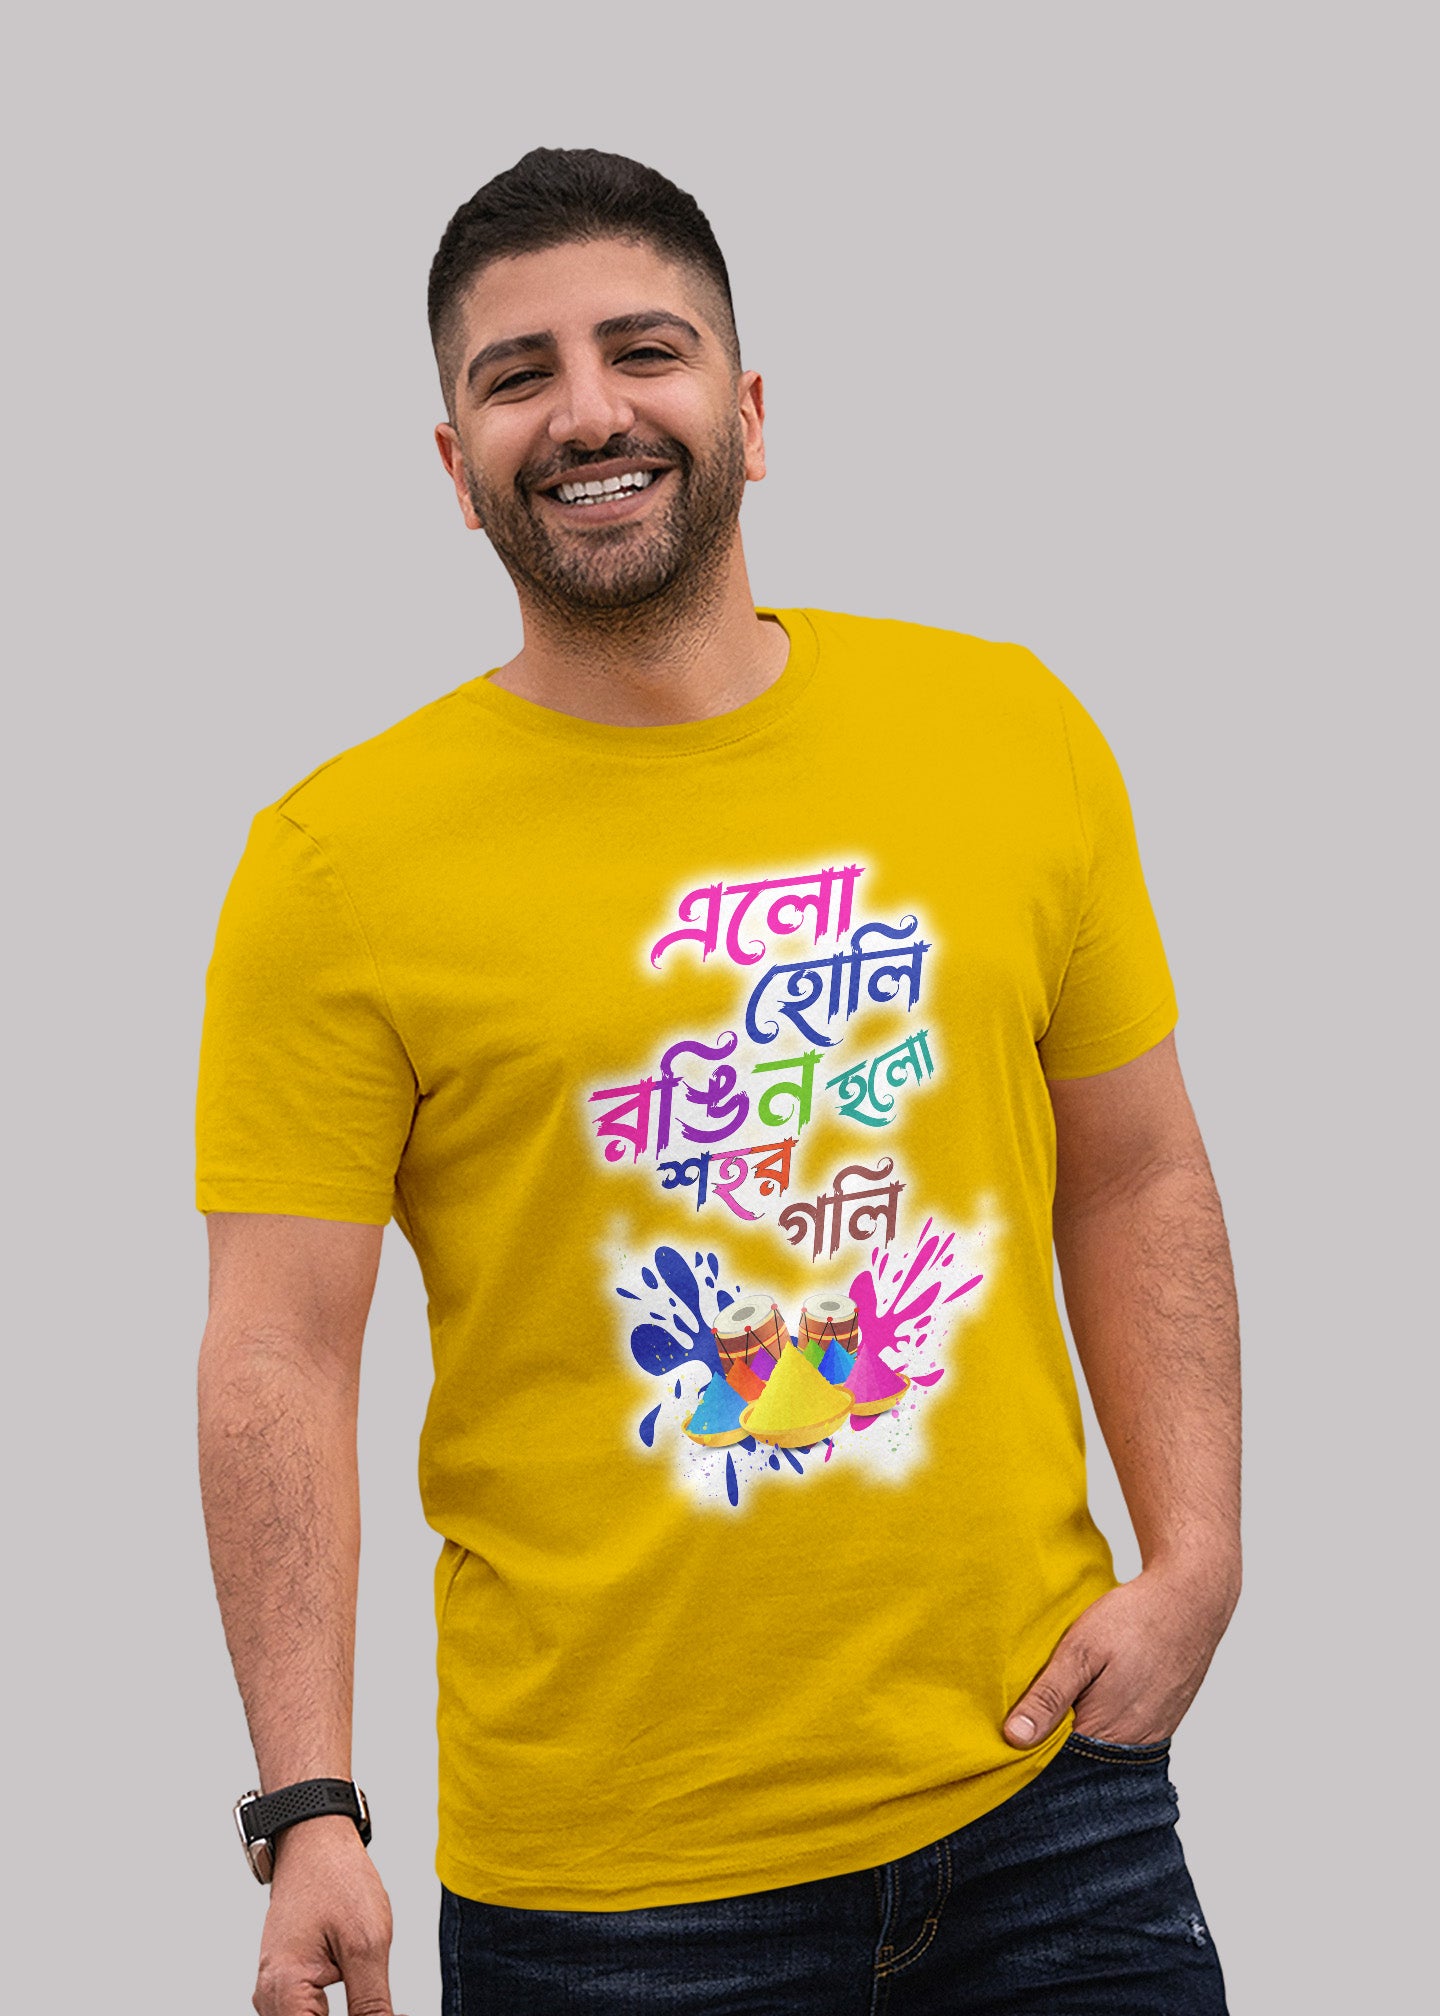 Elo holi rongin holo sohor goli bengali Printed Half Sleeve Premium Cotton T-shirt For Men